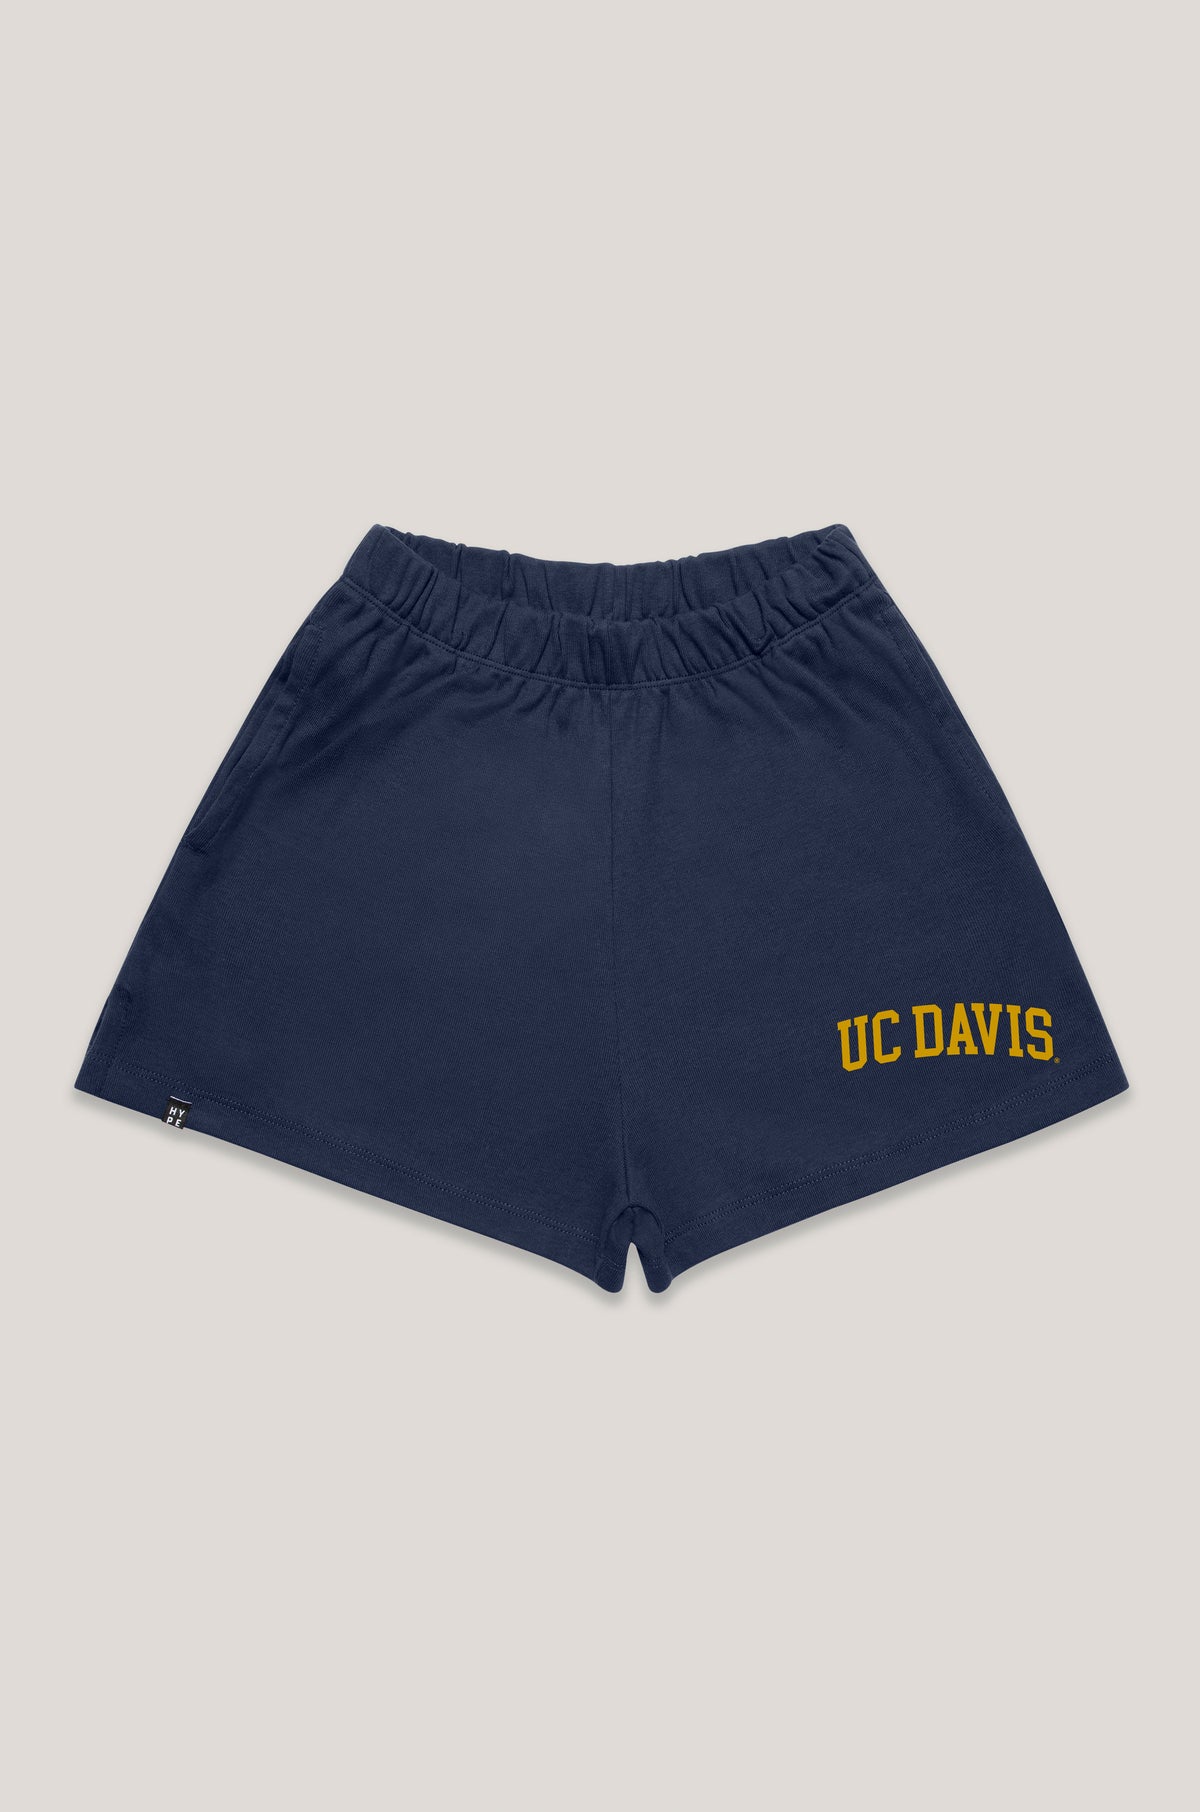 UC Davis Track Shorts